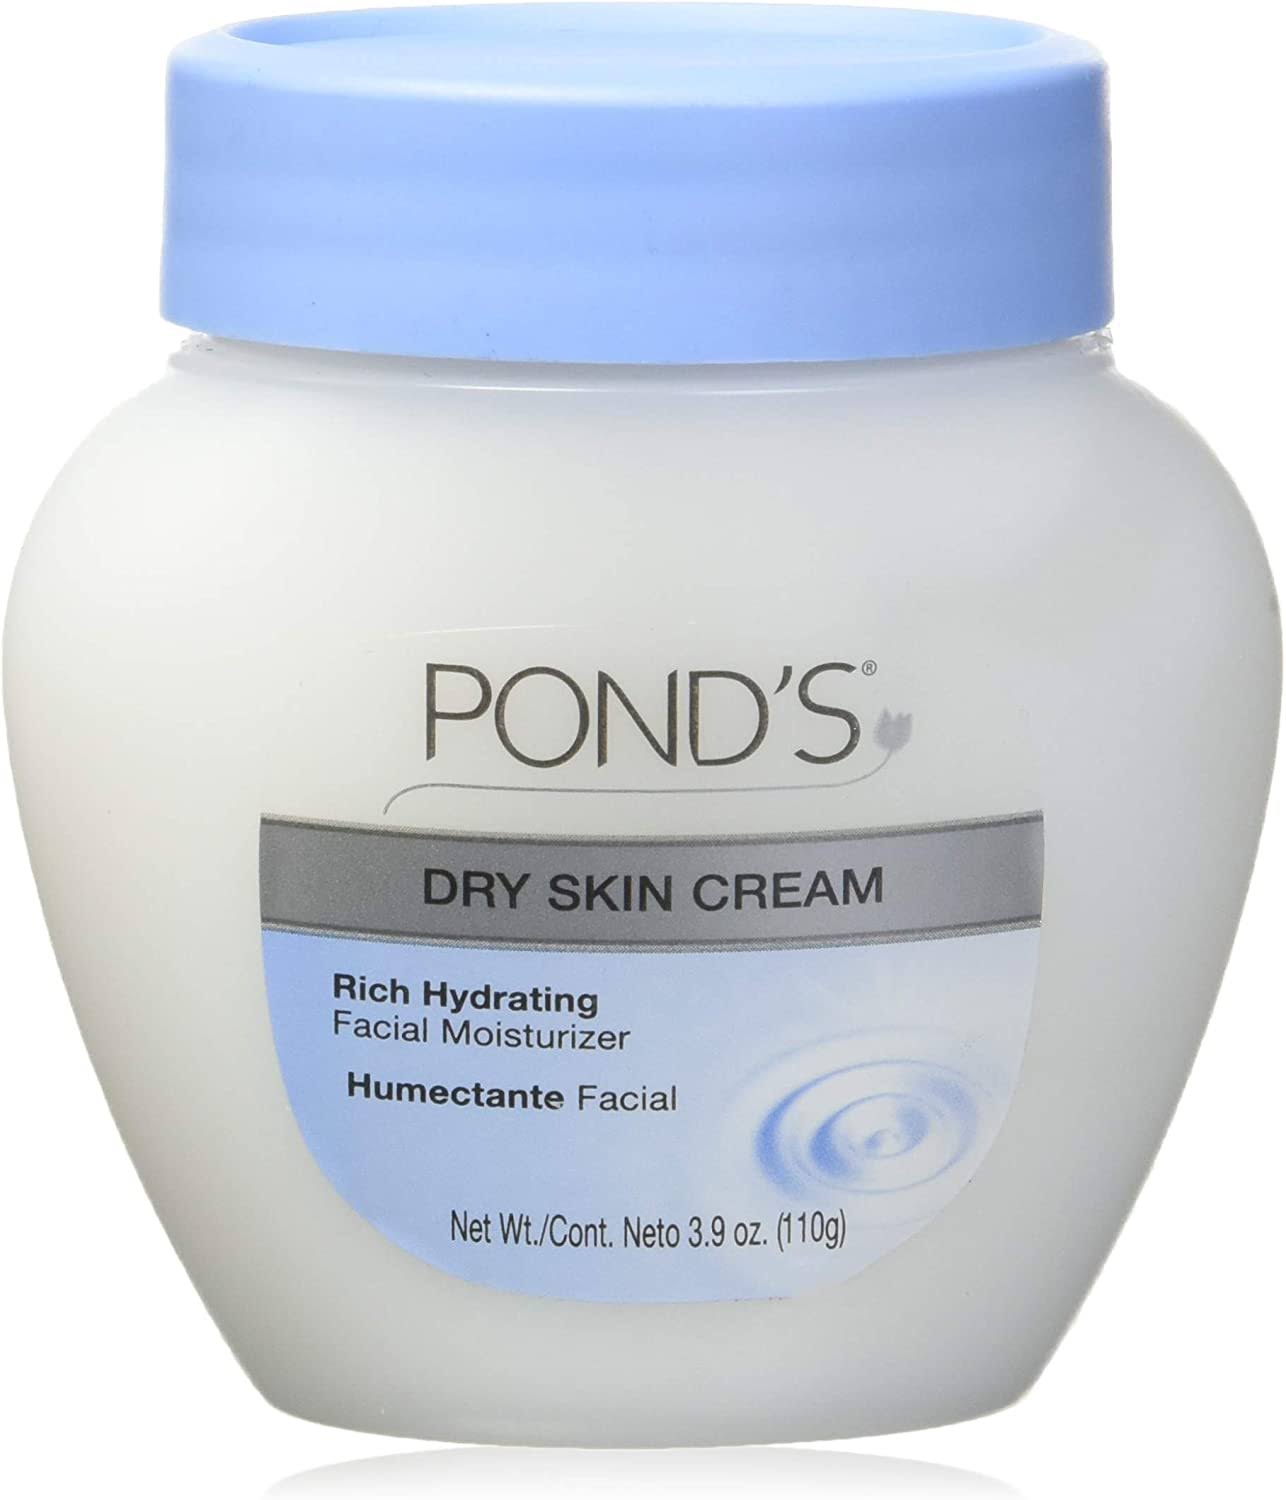 Pond's Dry Skin Cream - 118g